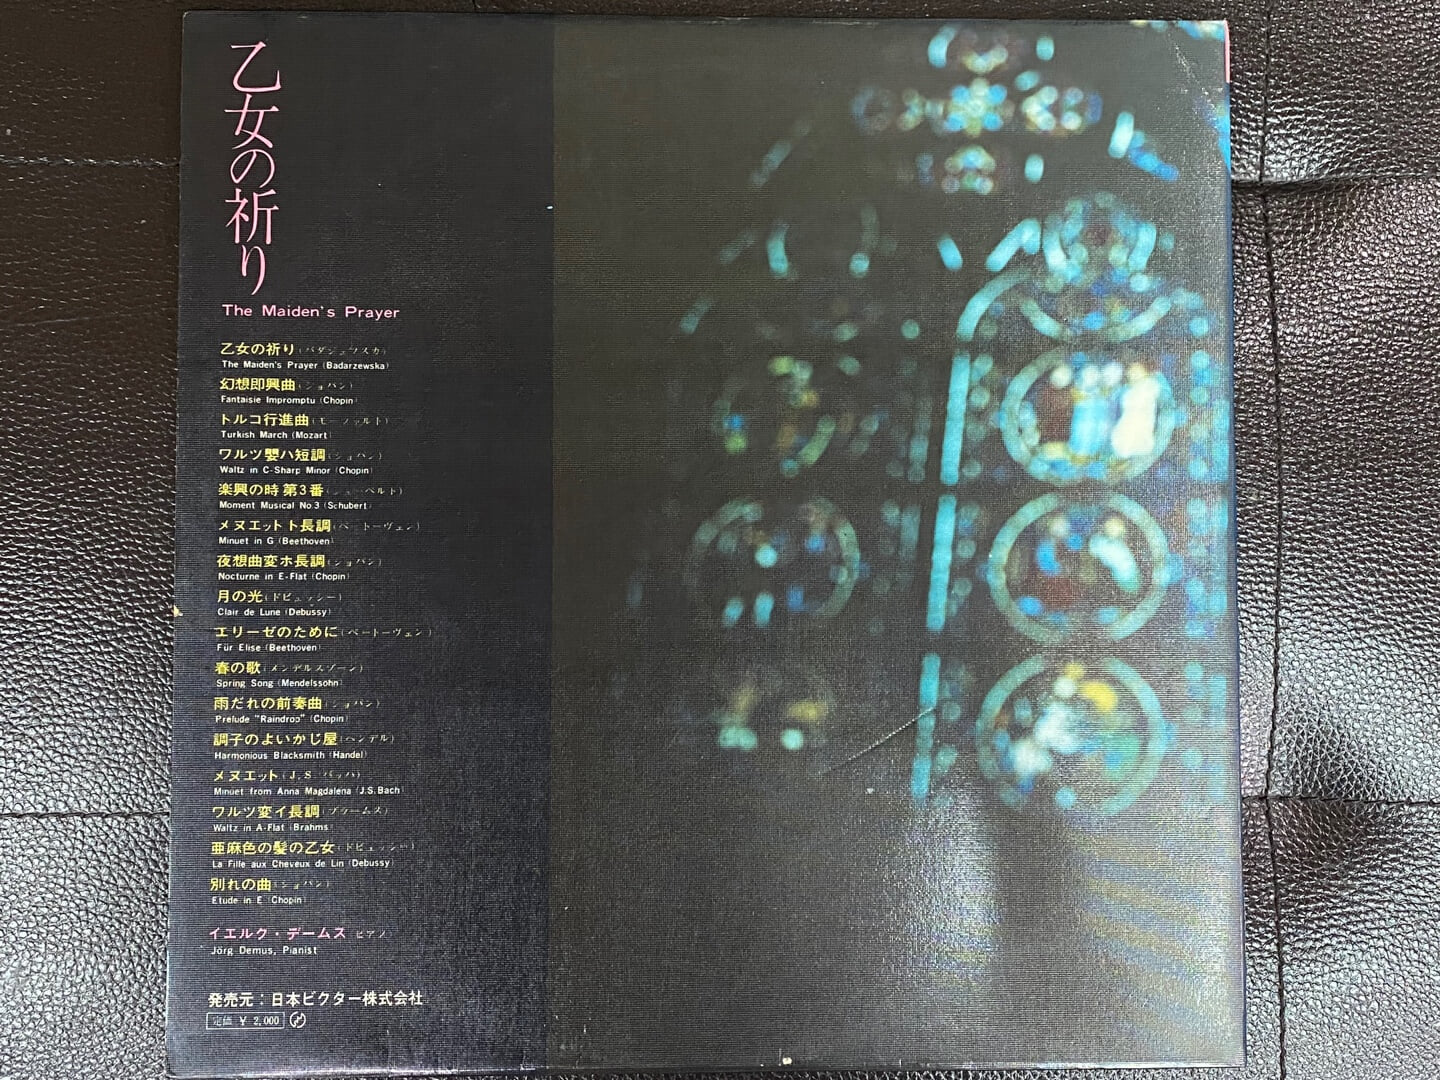 [LP] 외르크 데무스 - Jorg Demus - The Maiden's Prayer (乙女の祈り) LP [일본반]